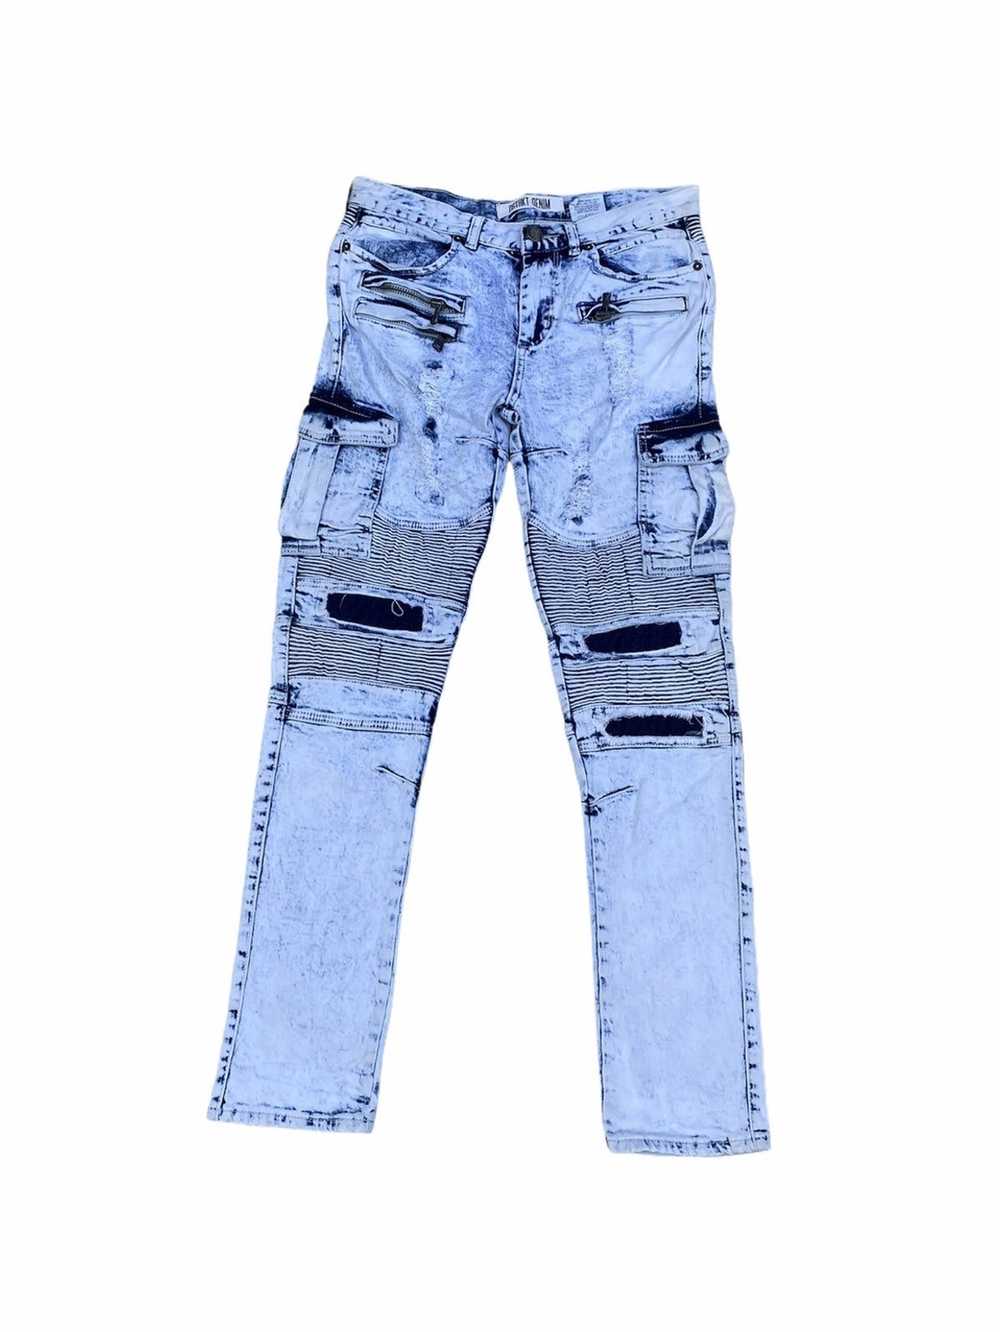 latest stylish funky jeans Pants For Kids 2021-2022 - YouTube | Biker denim  jeans, Kids denim, Boys jeans